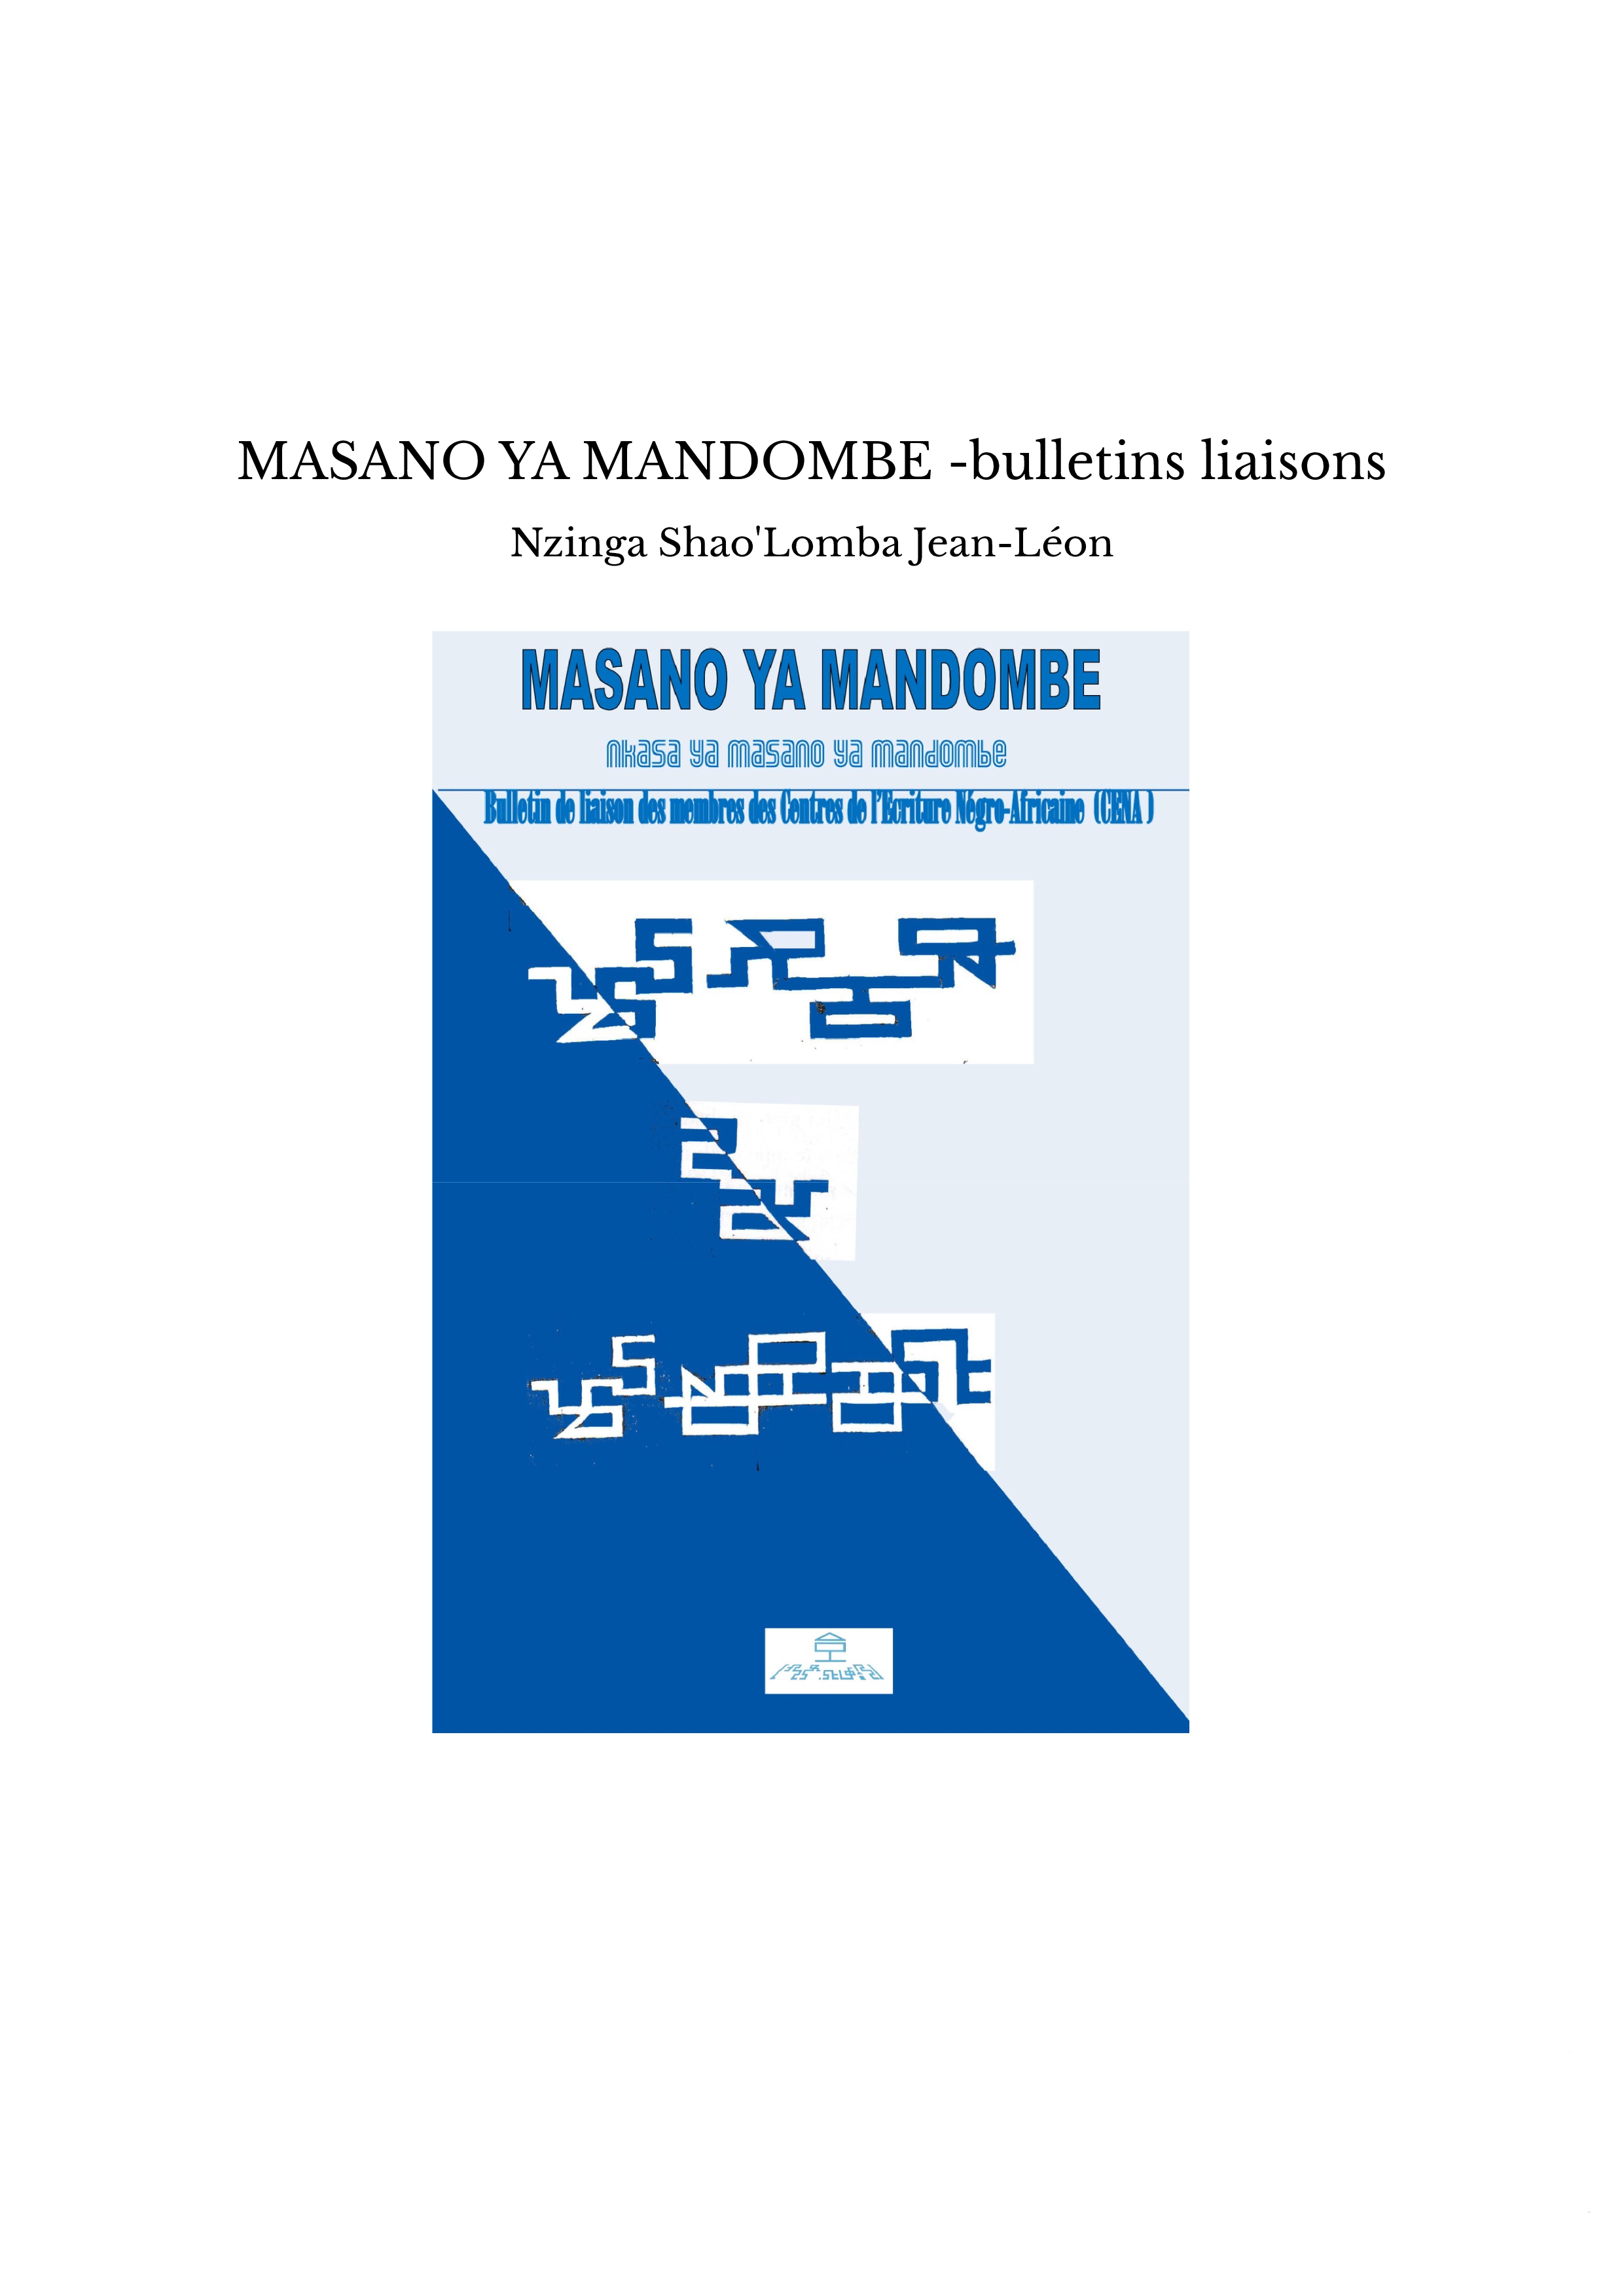 MASANO YA MANDOMBE -bulletins liaisons